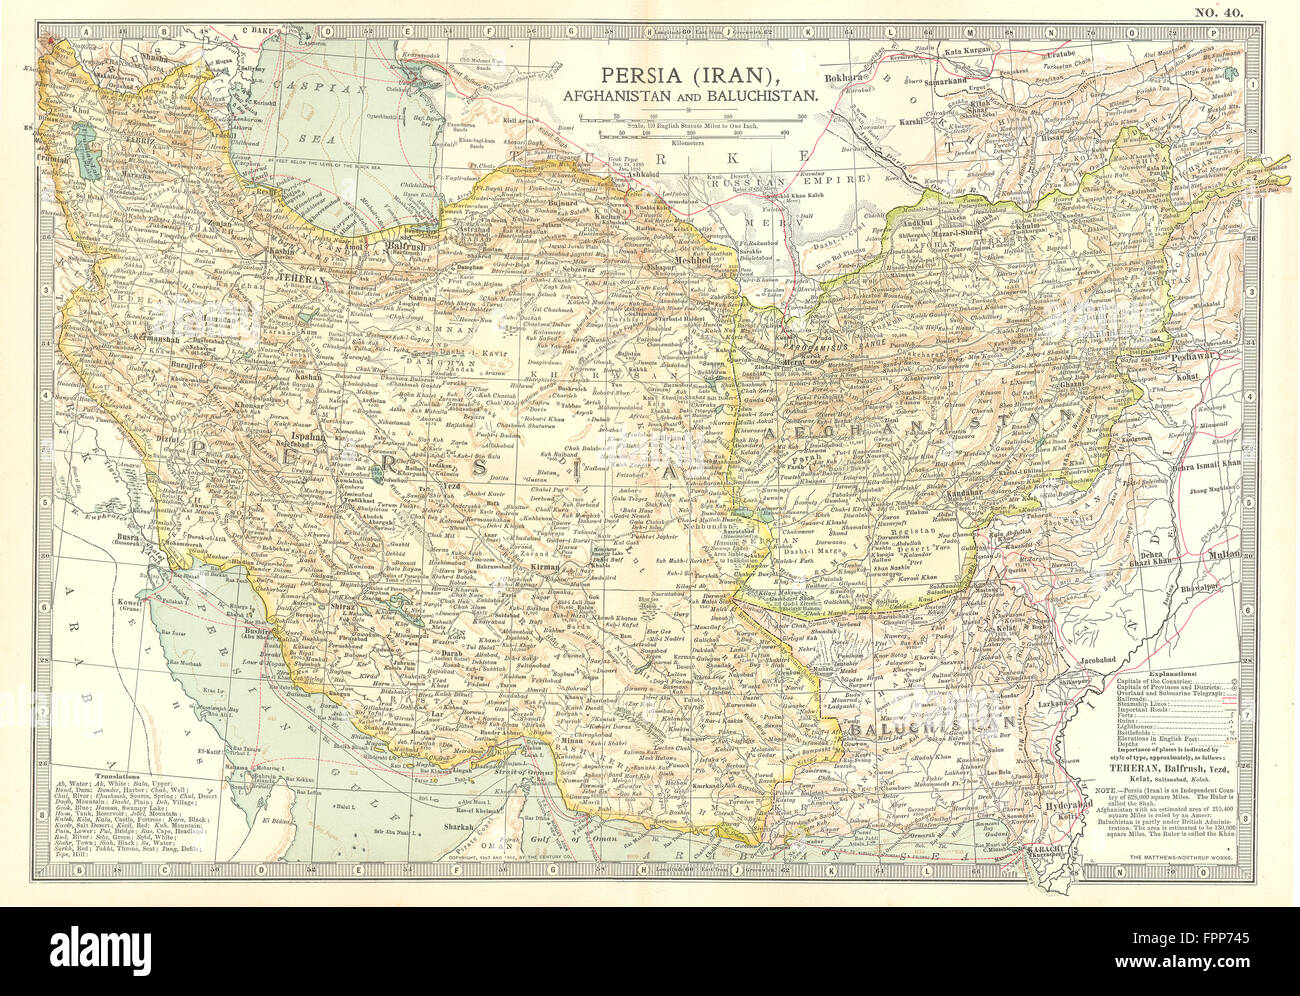 IRAN: Persia Afghanistan & Baluchistan Pakistan, 1903 antique map Stock Photo